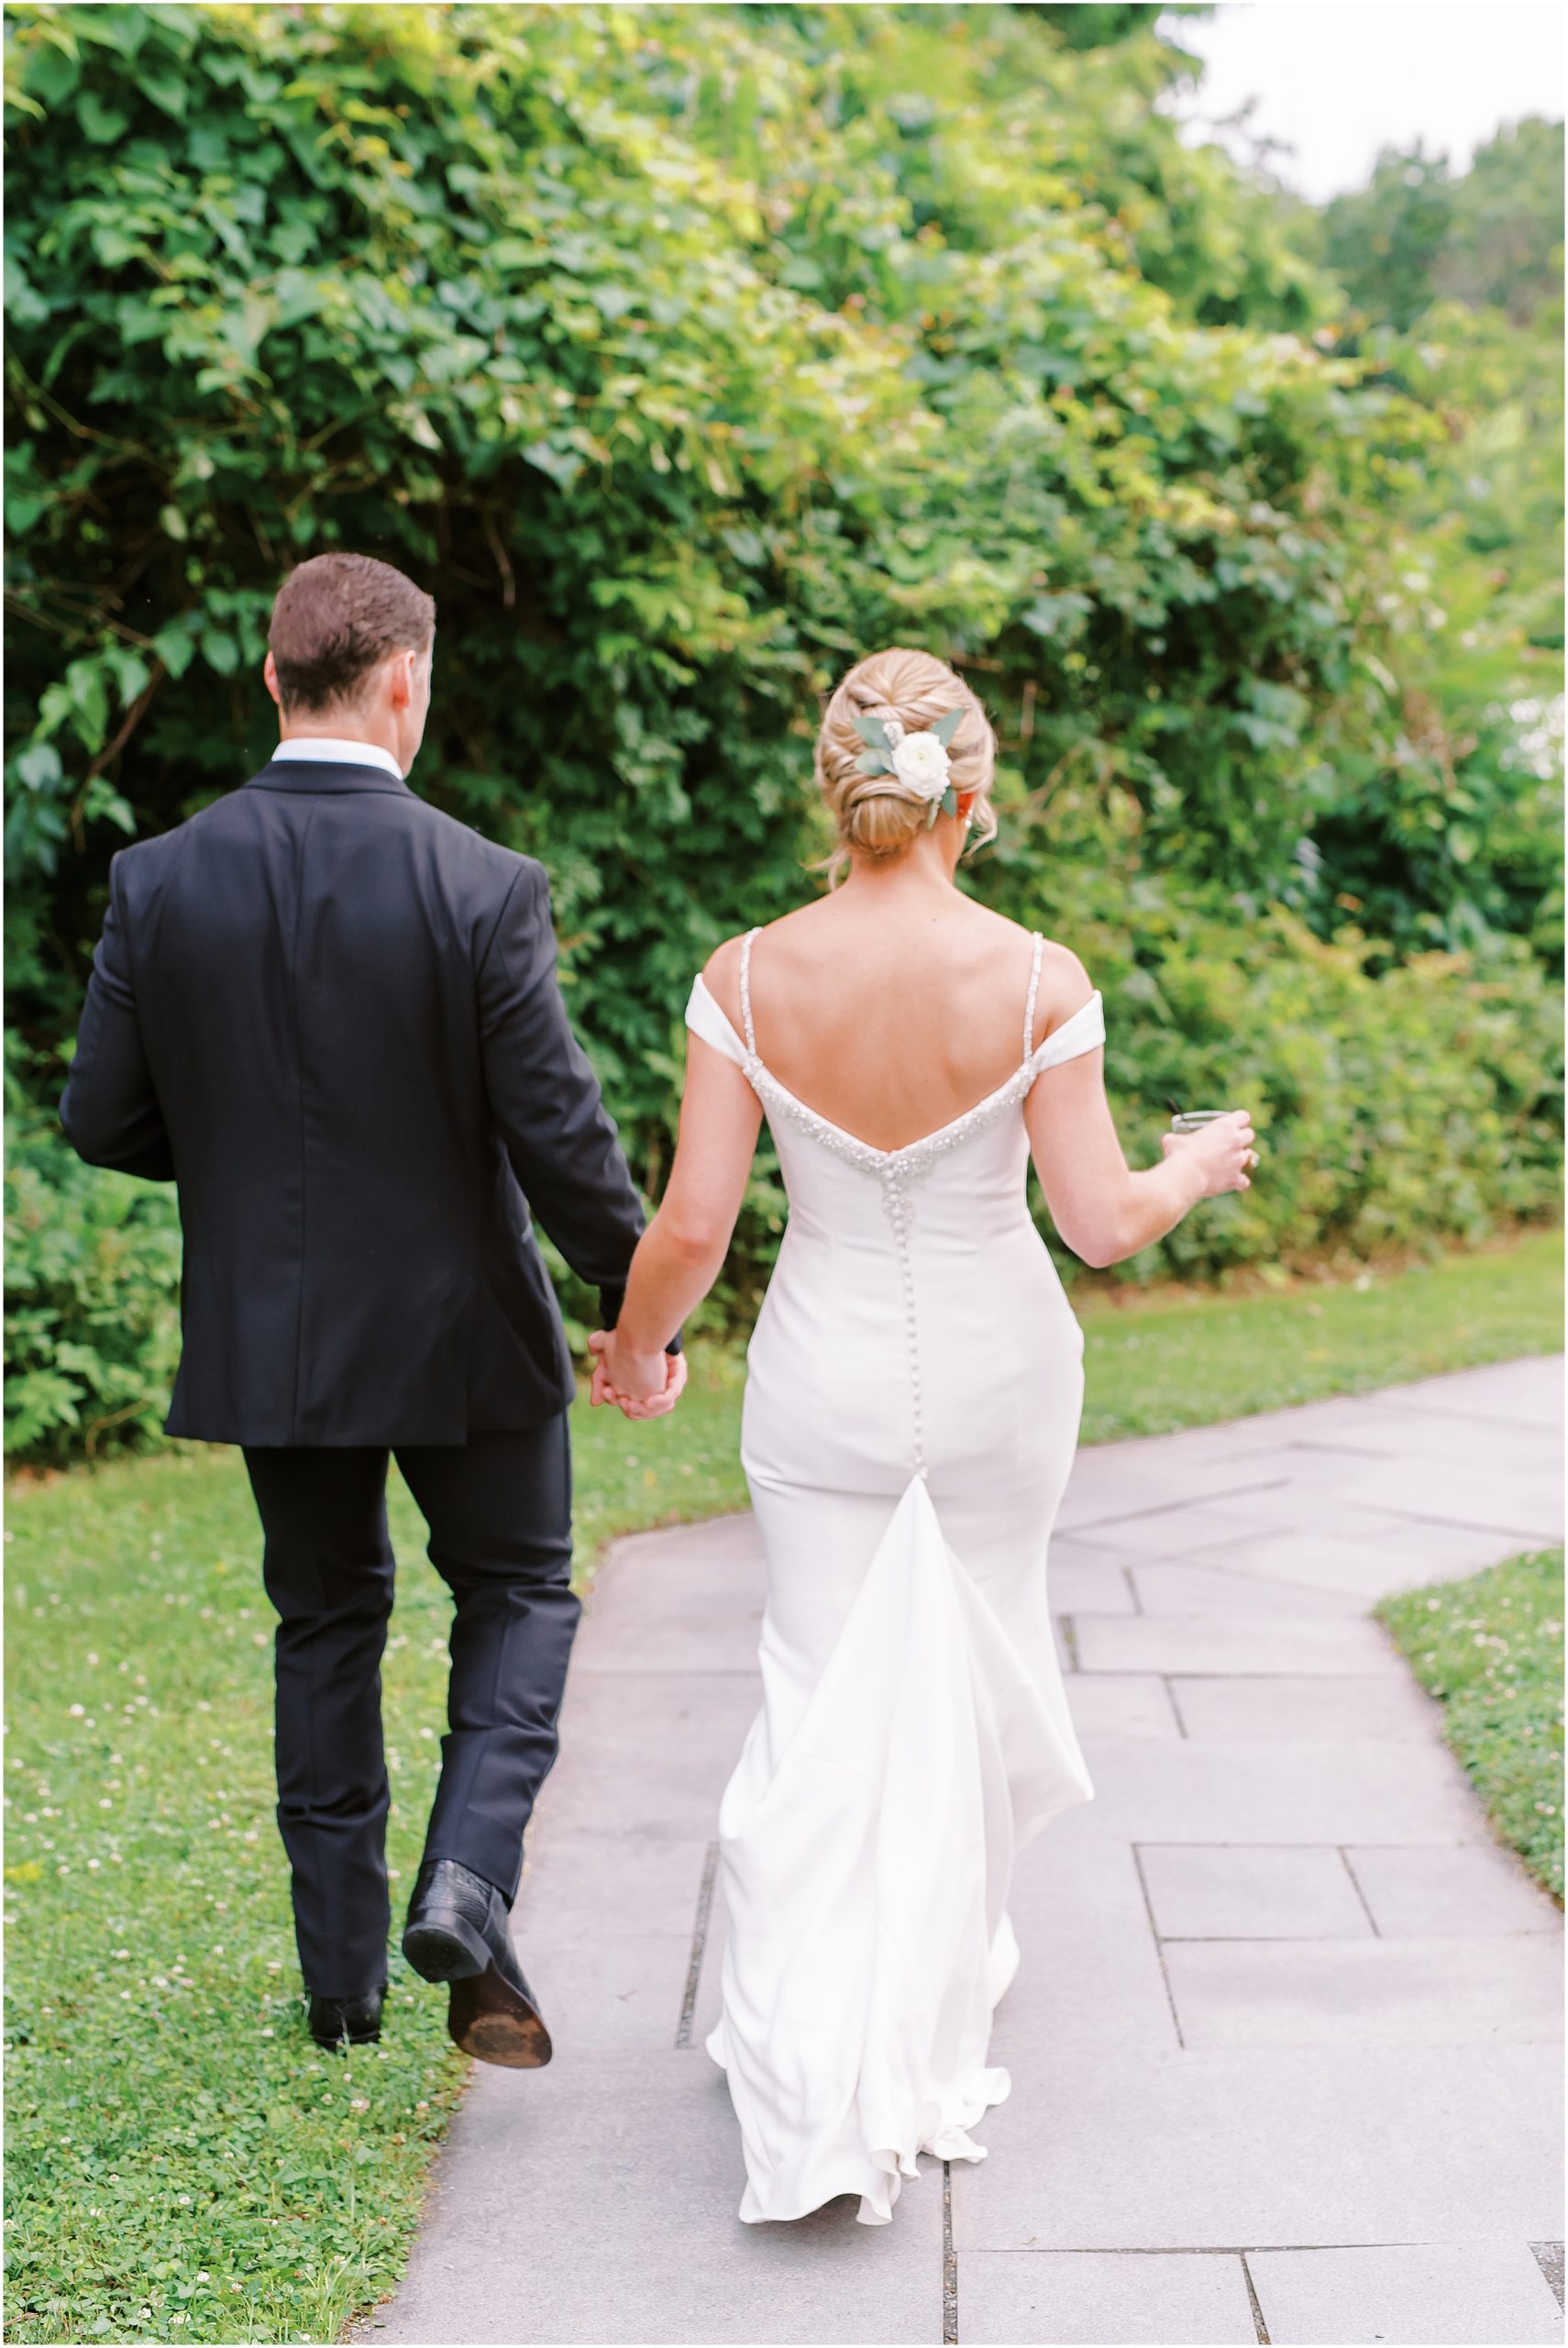 Bride and groom walking down path